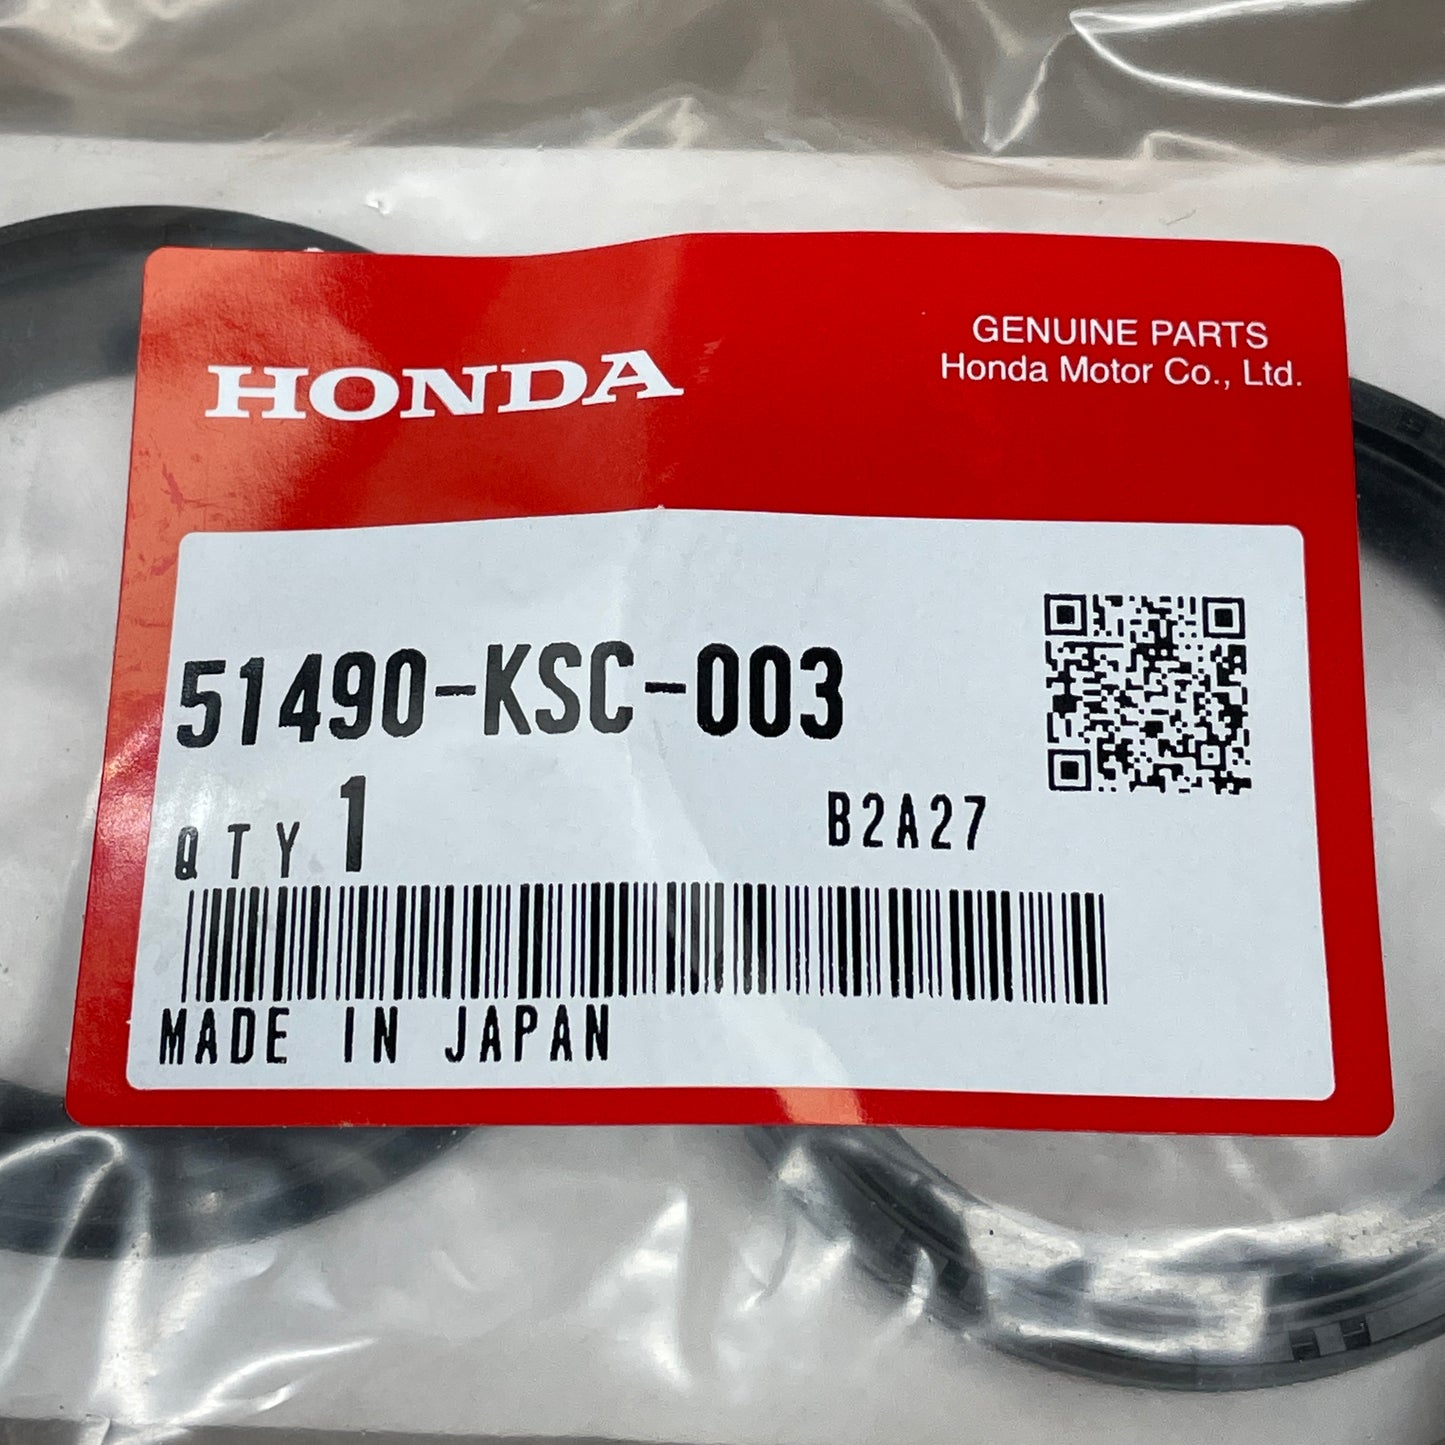 HONDA Front Fork Seal Set CRF250X CRF450X 51490-KSC-003 OEM (New)